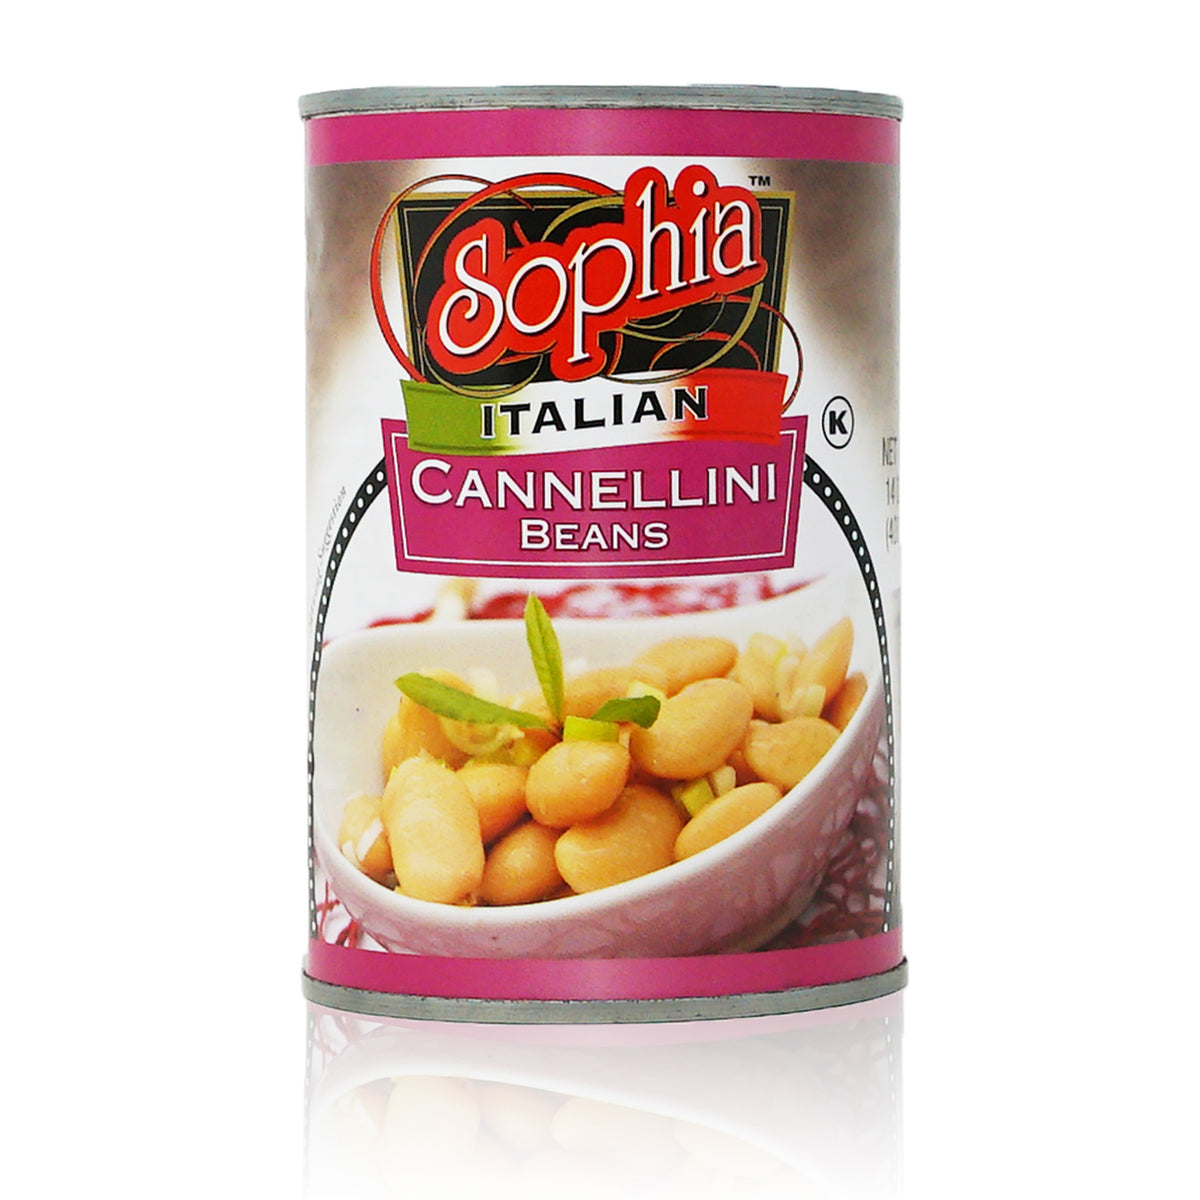 Sophia Italian Beans - Cannellini